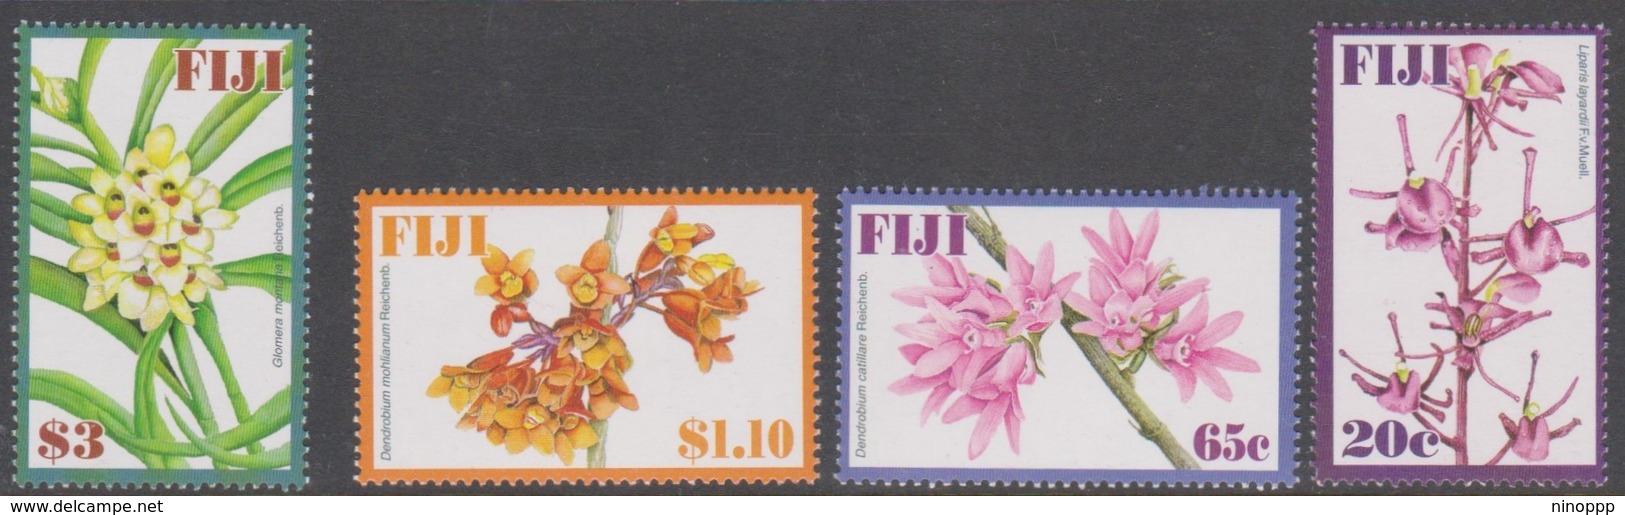 Fiji SG 1372-1375 2007 Orchids, Mint Never Hinged - Fiji (1970-...)